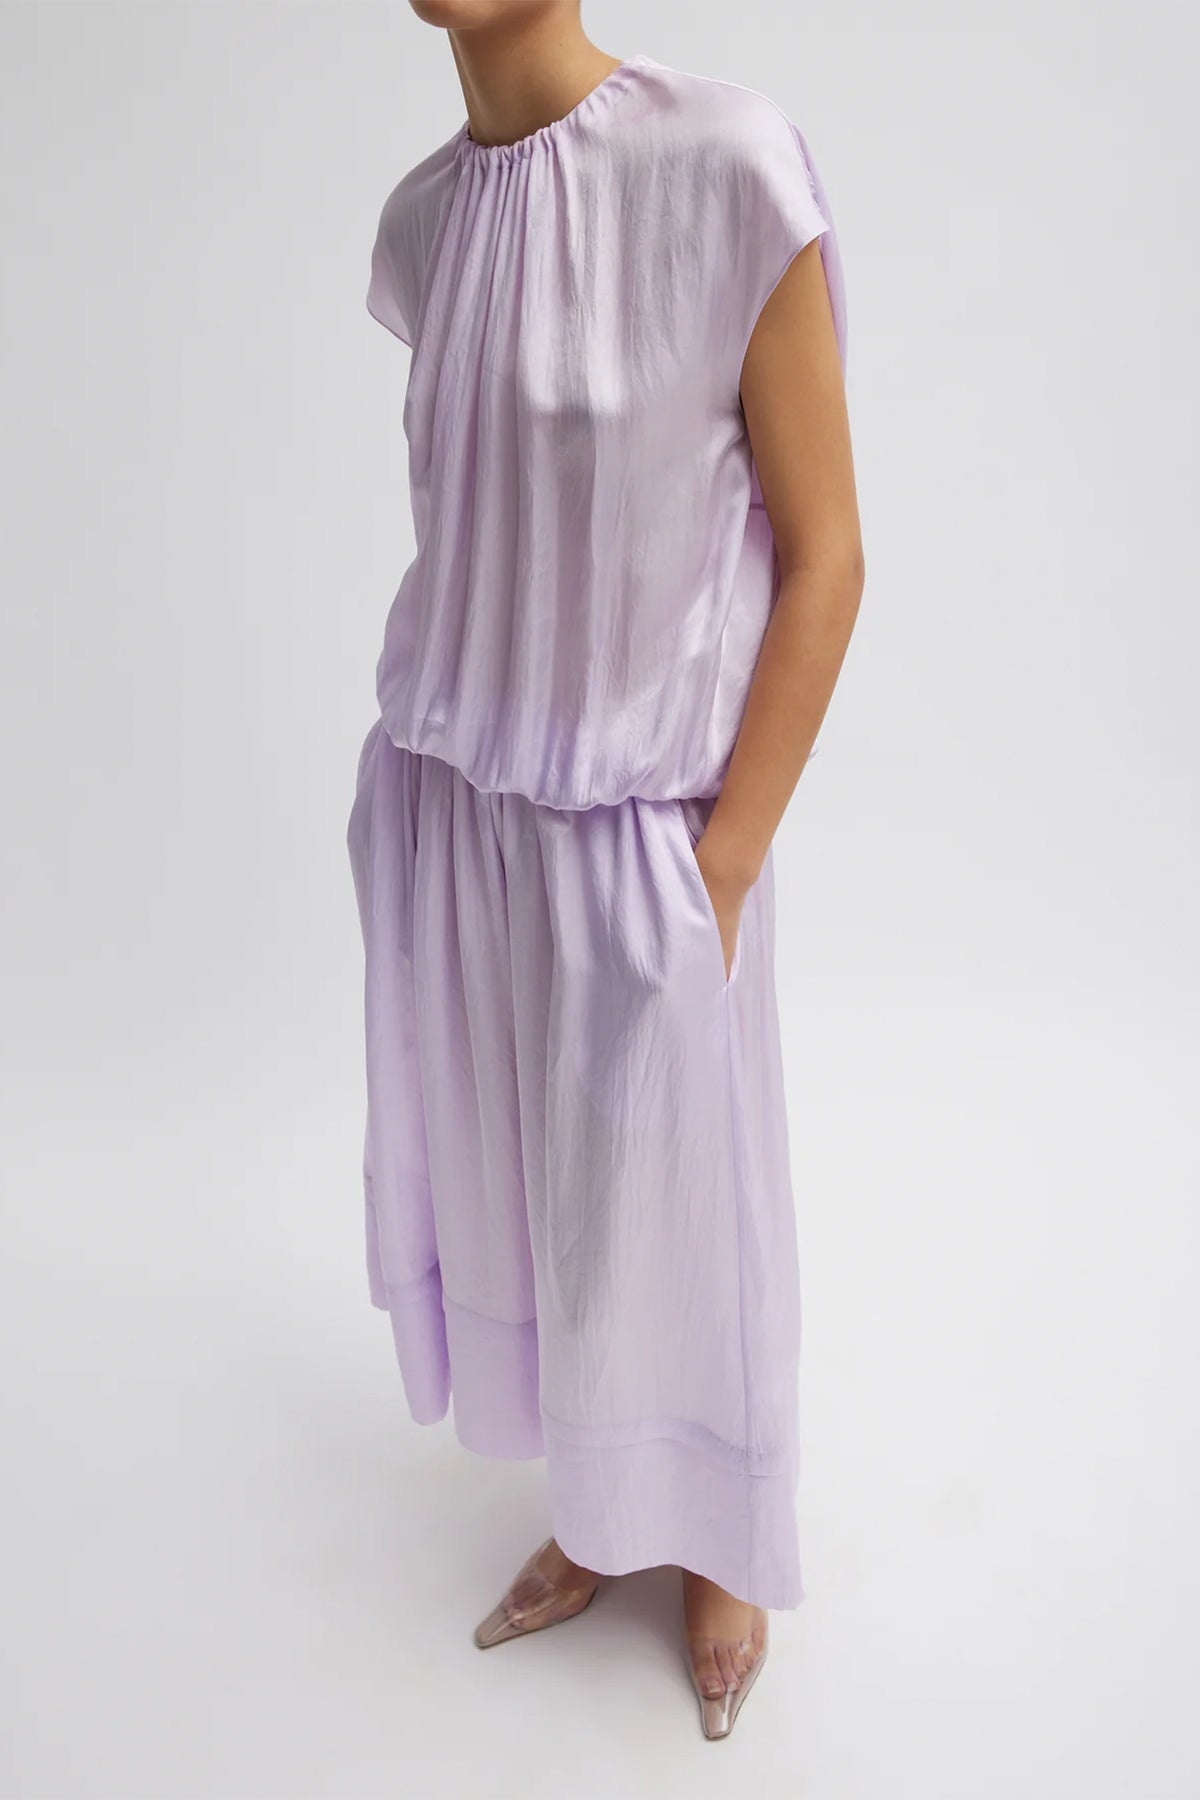 Spring Acetate Shirred Circular Dress in Pale Lavender - shop-olivia.com